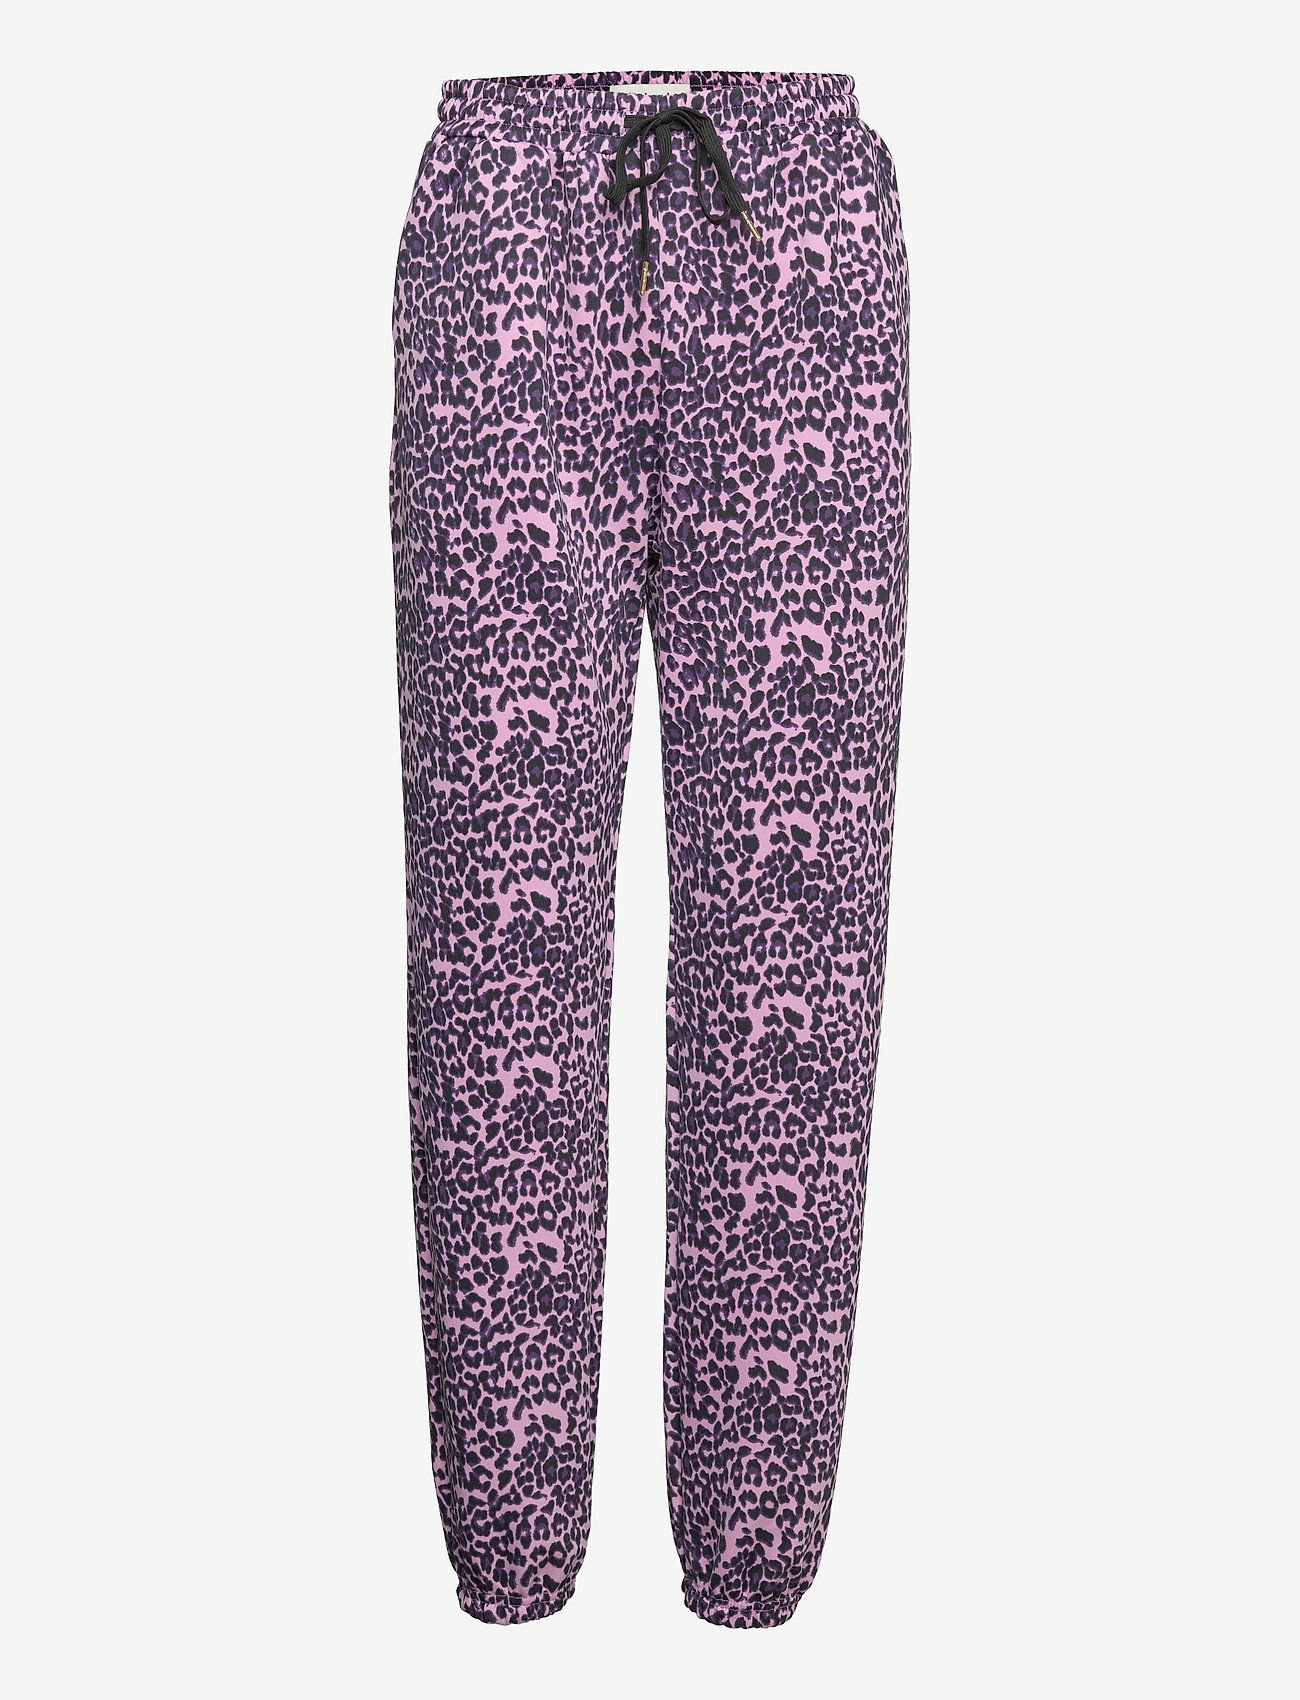 Lollys Laundry - Mona Pants - women - 72 leopard print - 0